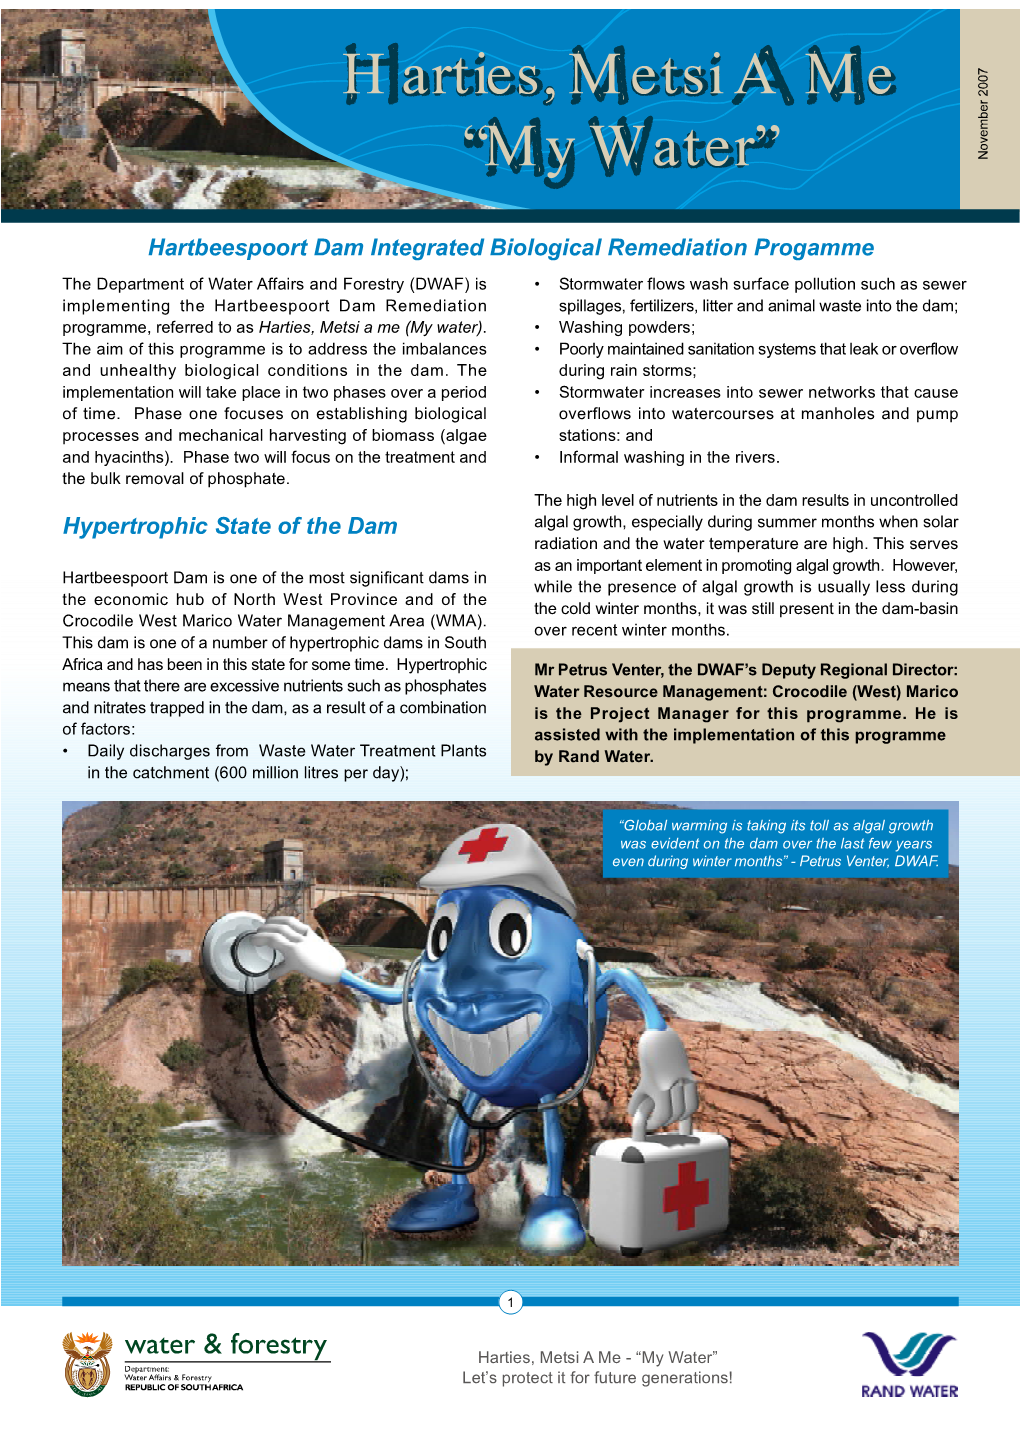 Hartbeespoort Dam Remediation Project